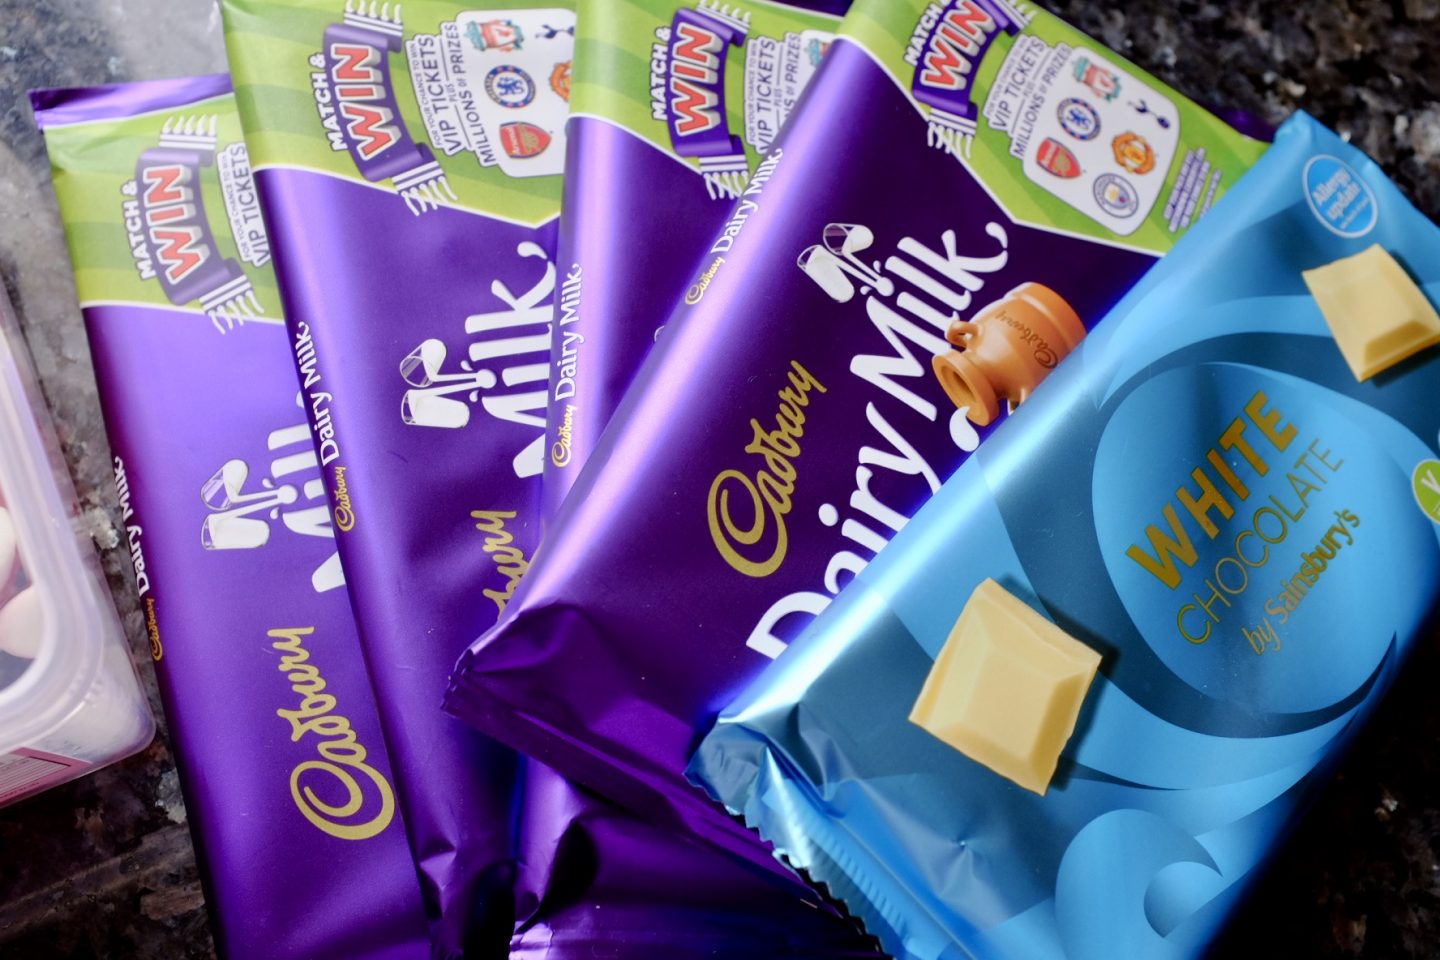 cadburys chocolate milk and Sainsbury's white chocolate